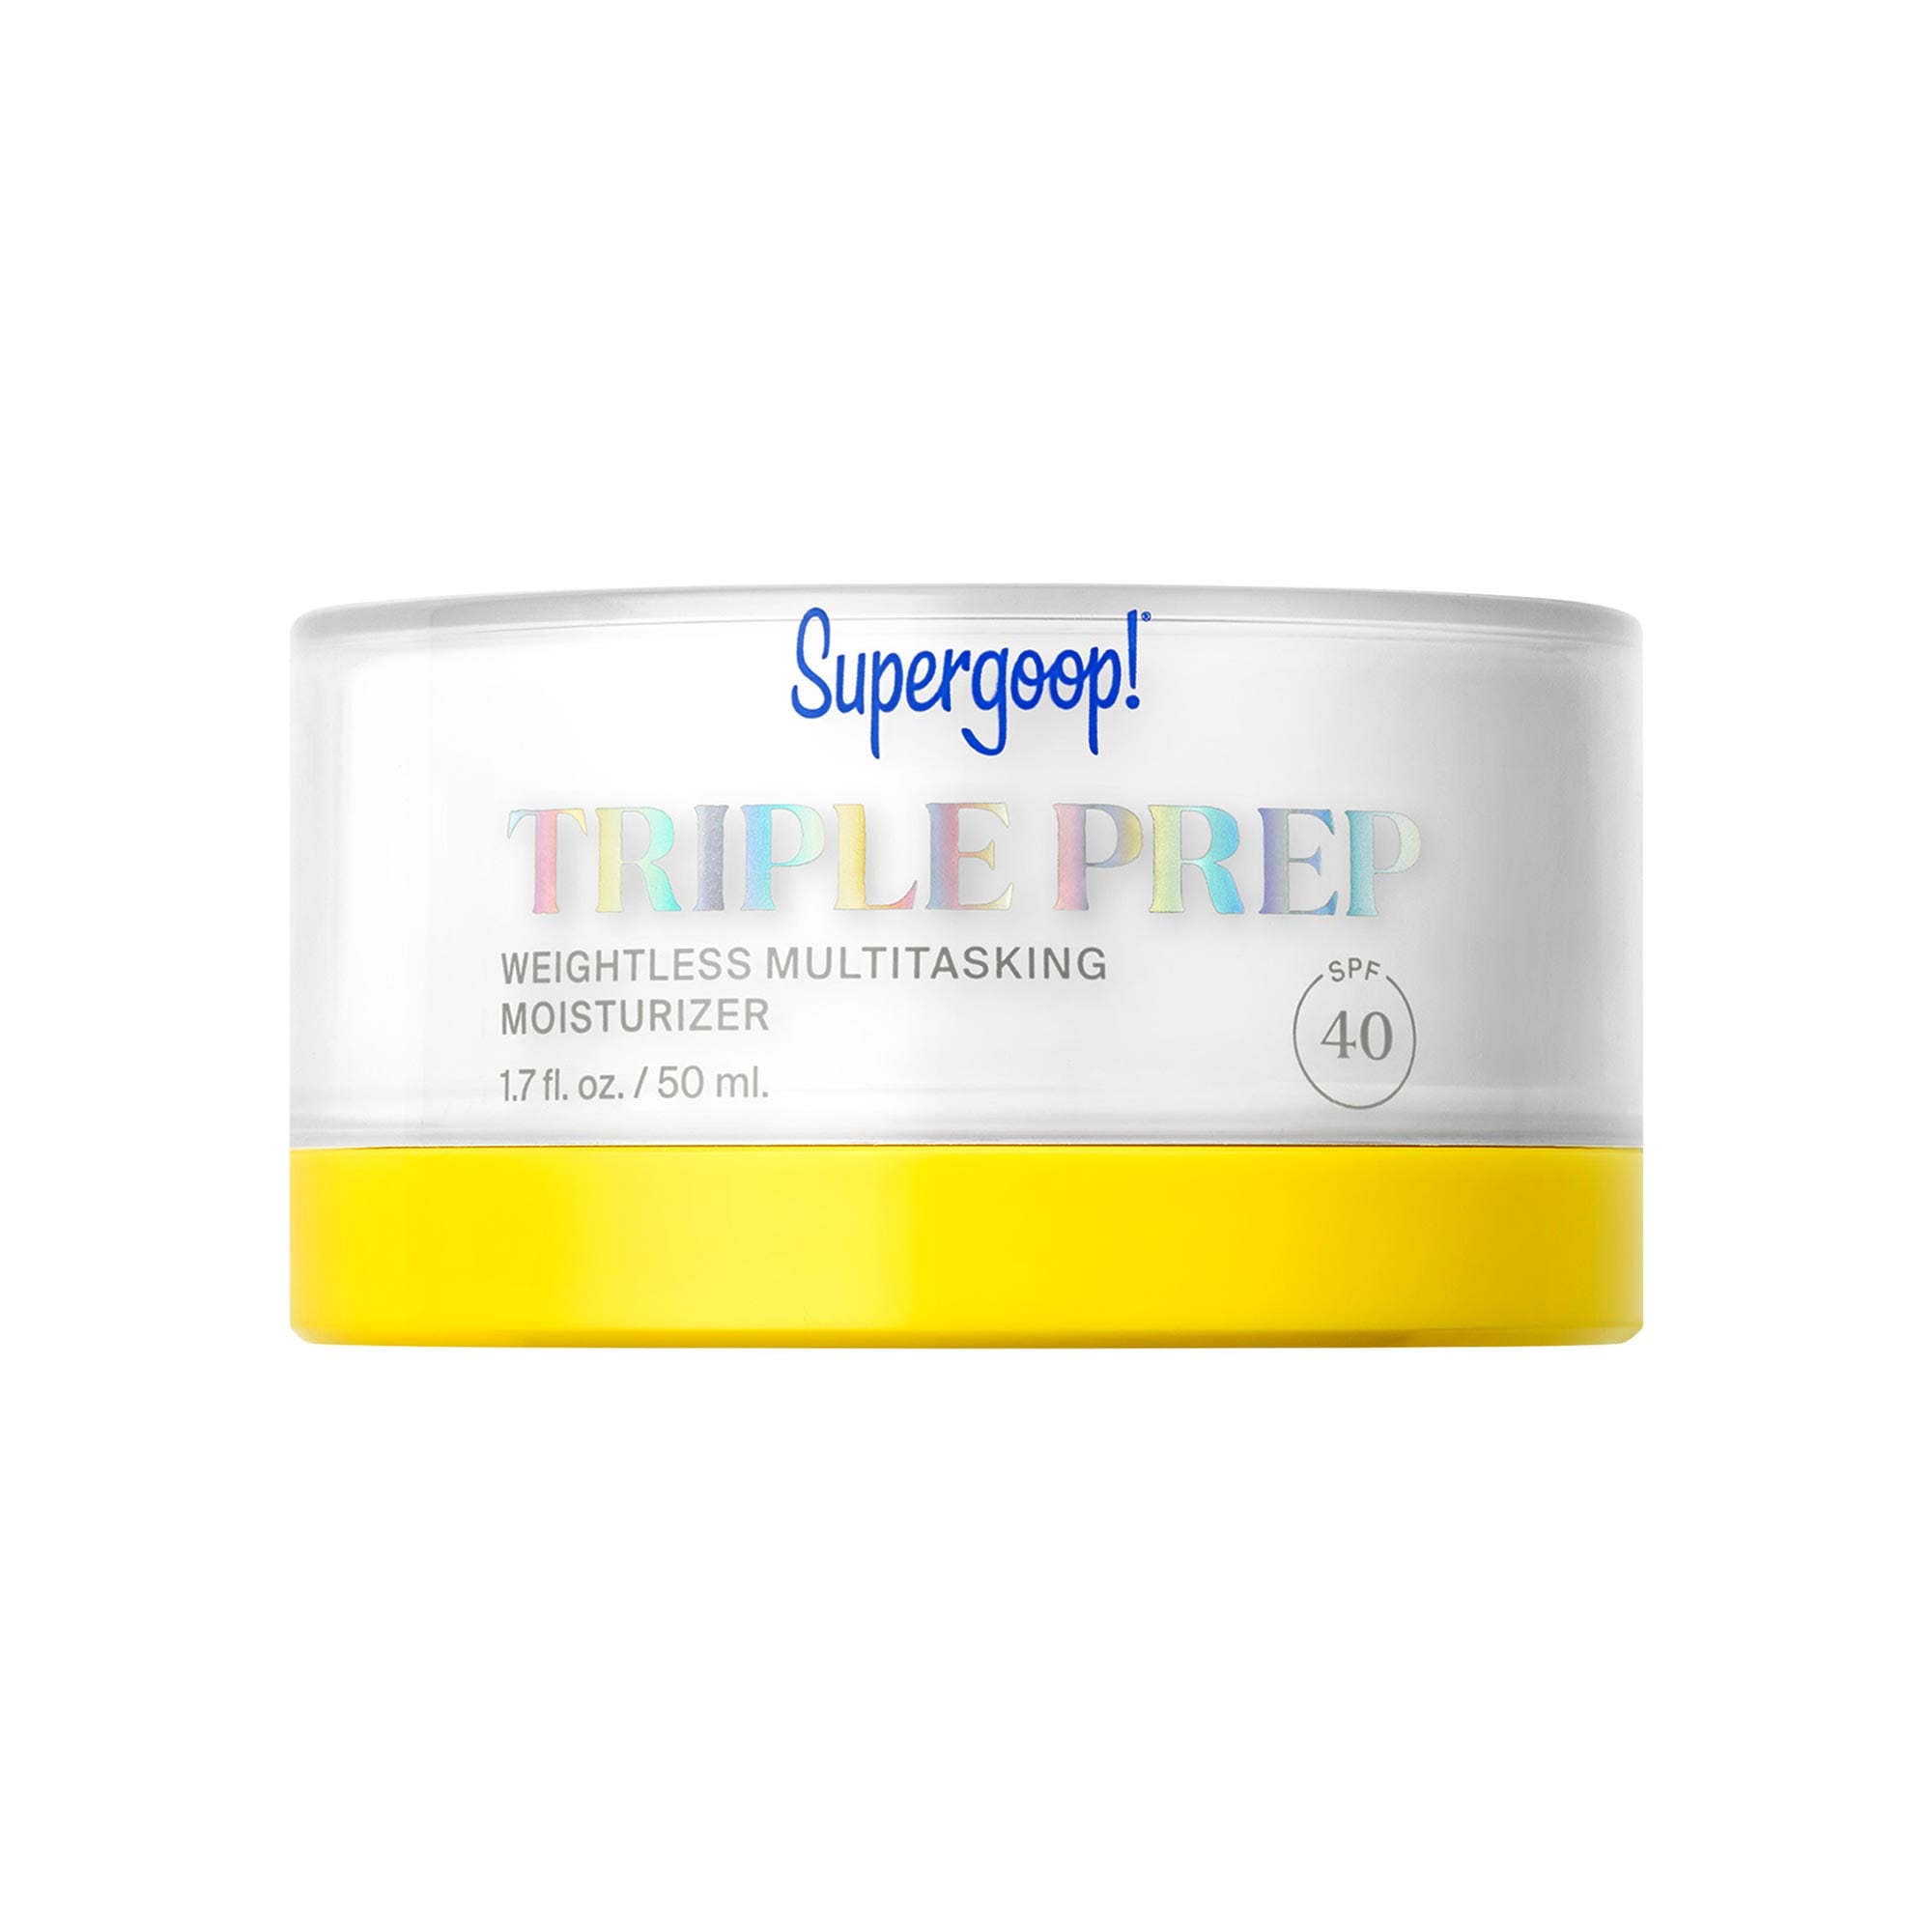 Triple Prep Weightless Multitasking Moisturizer SPF 40 Face Sunscreen Supergoop!